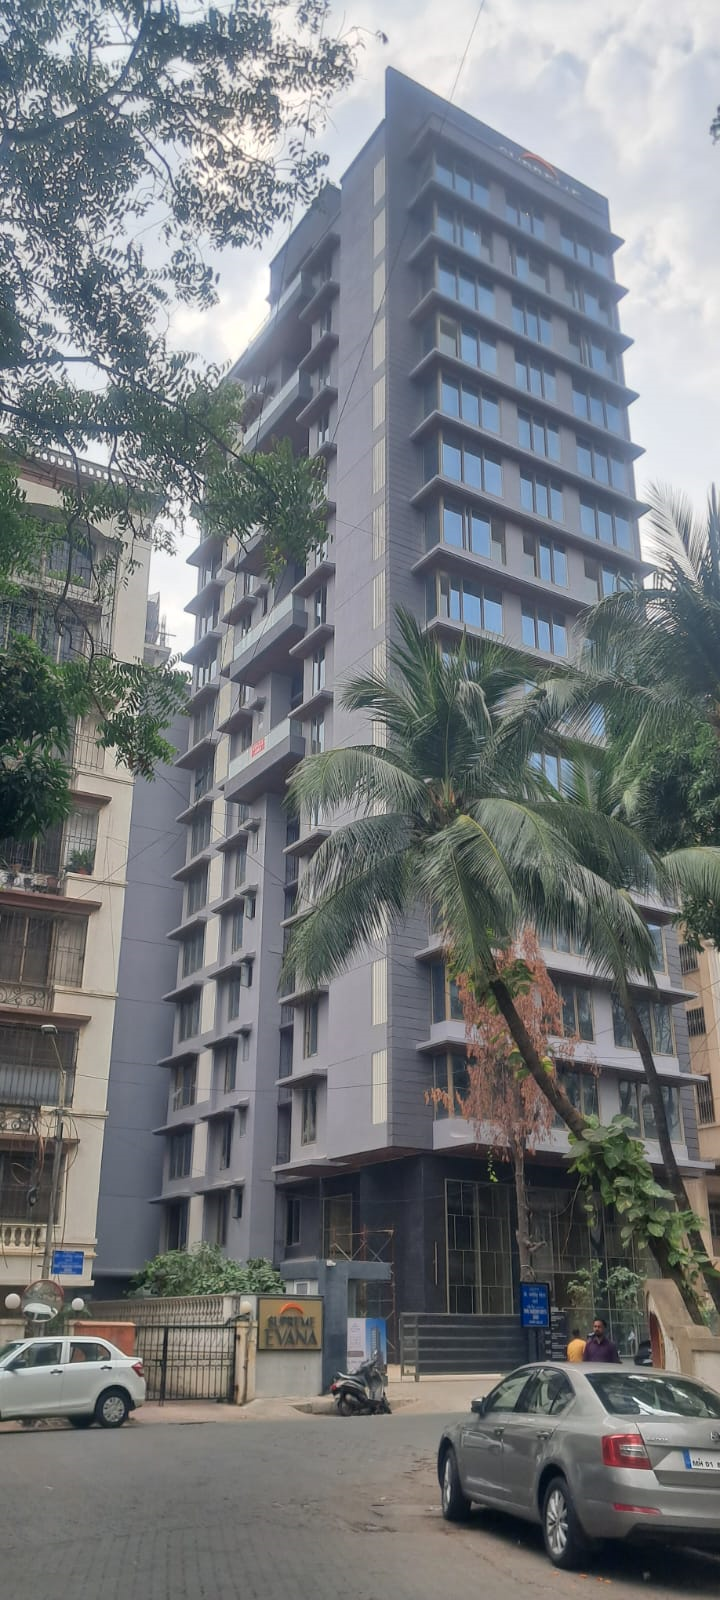 3 BHK Flat on Rent in Bandra West - Supreme Evana